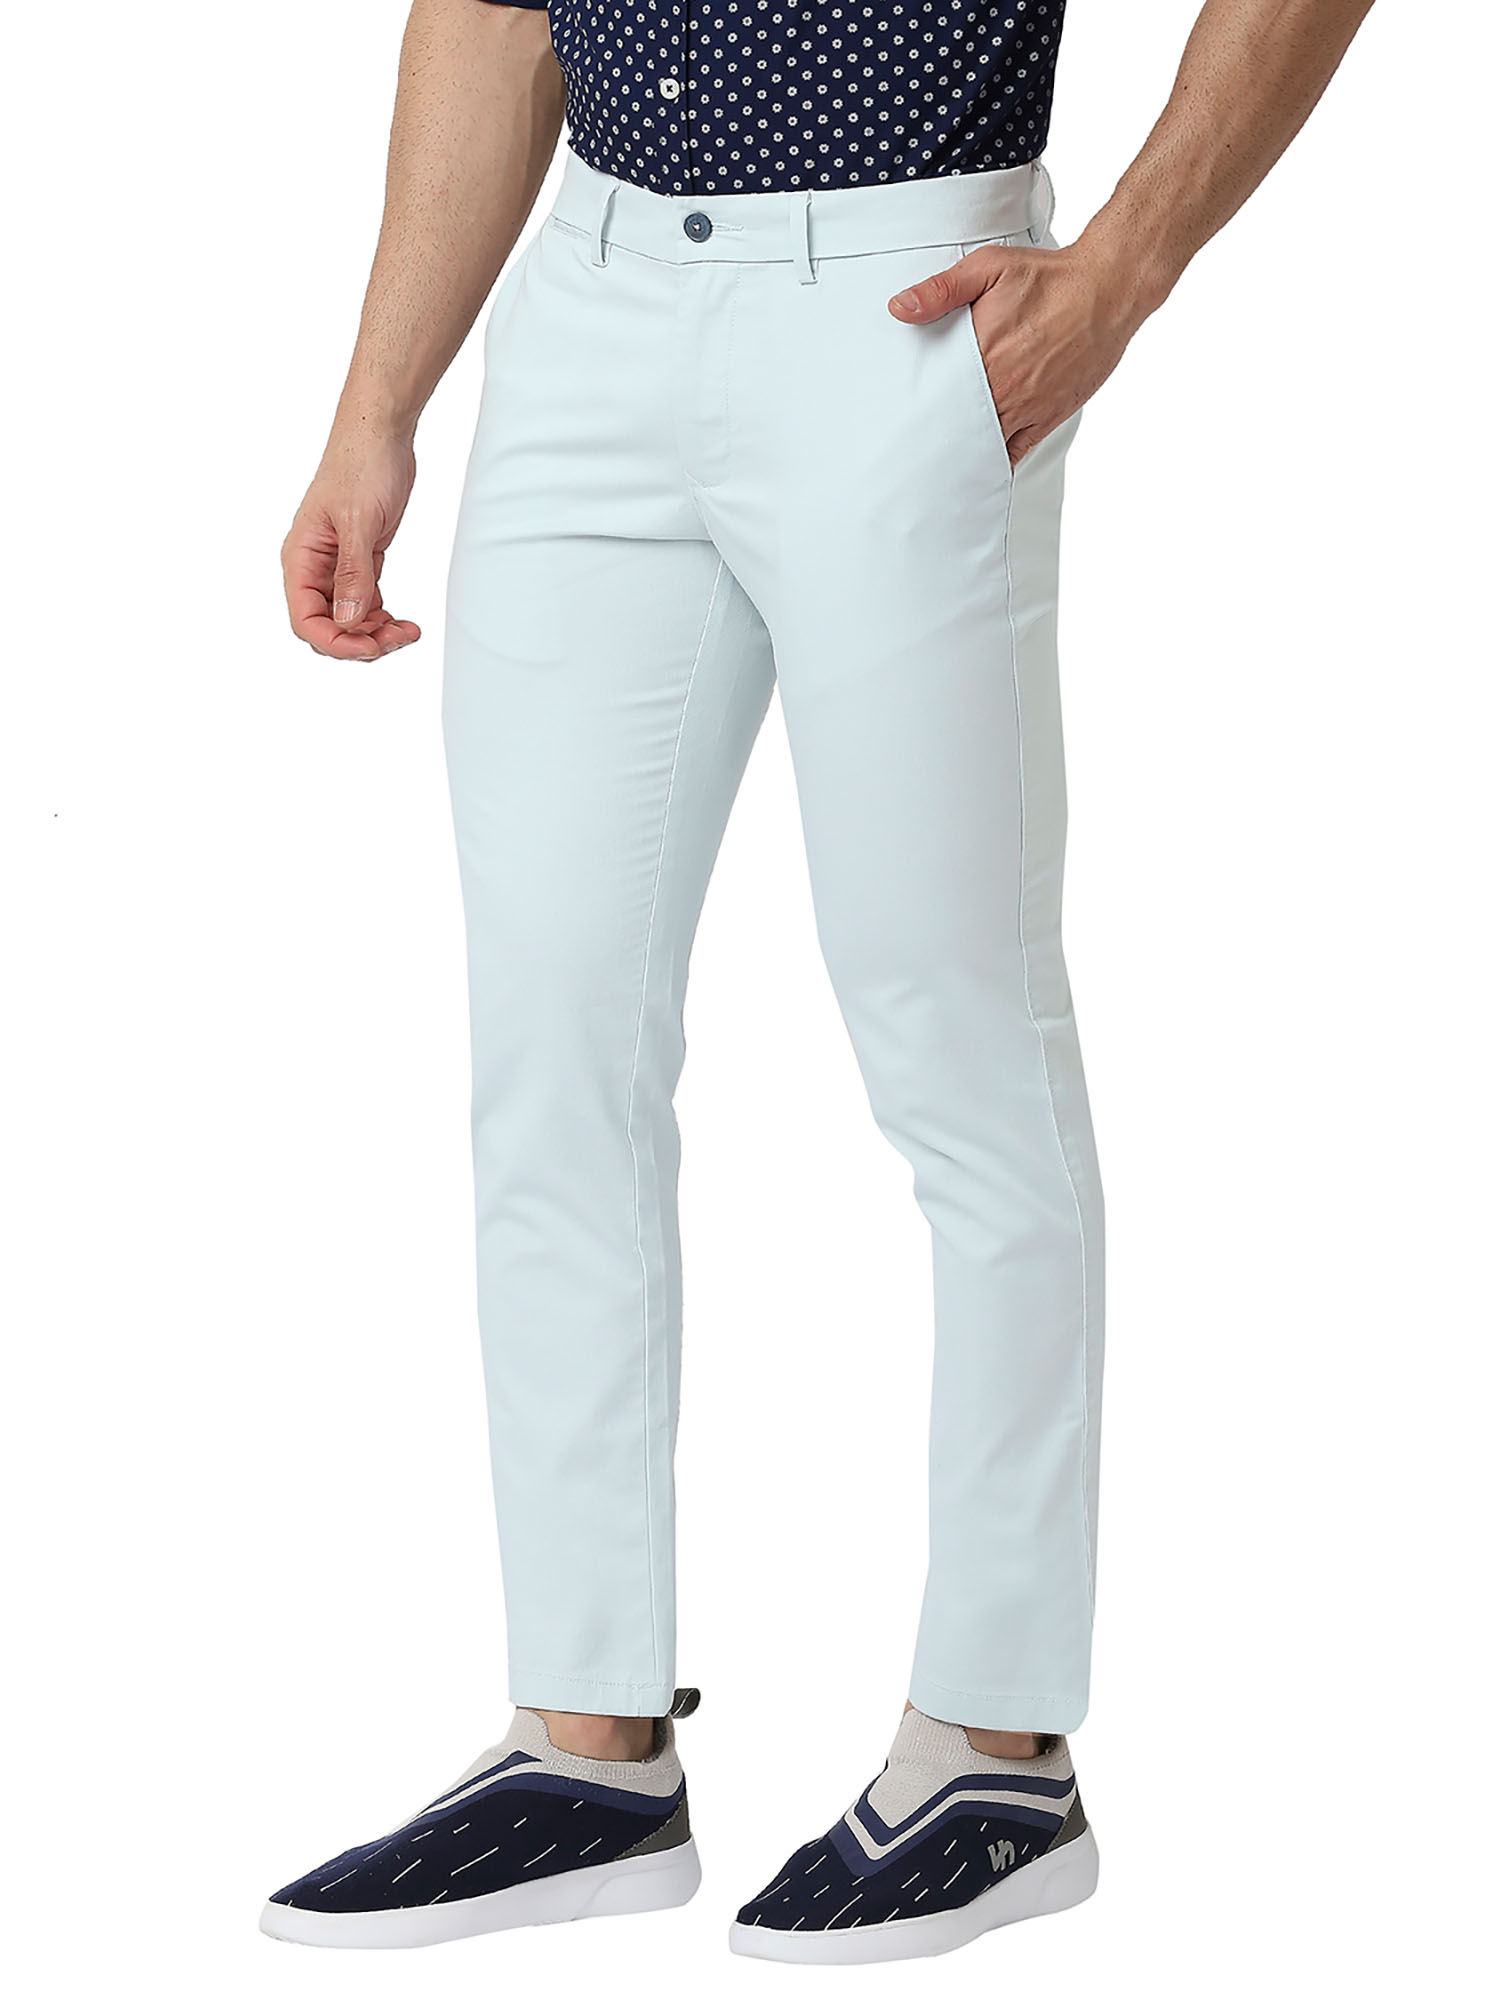 Buy STYLESTONE Women's Elasticated Waistband Denim Pants-Ice Blue  (3744IceShirringPantL) at Amazon.in